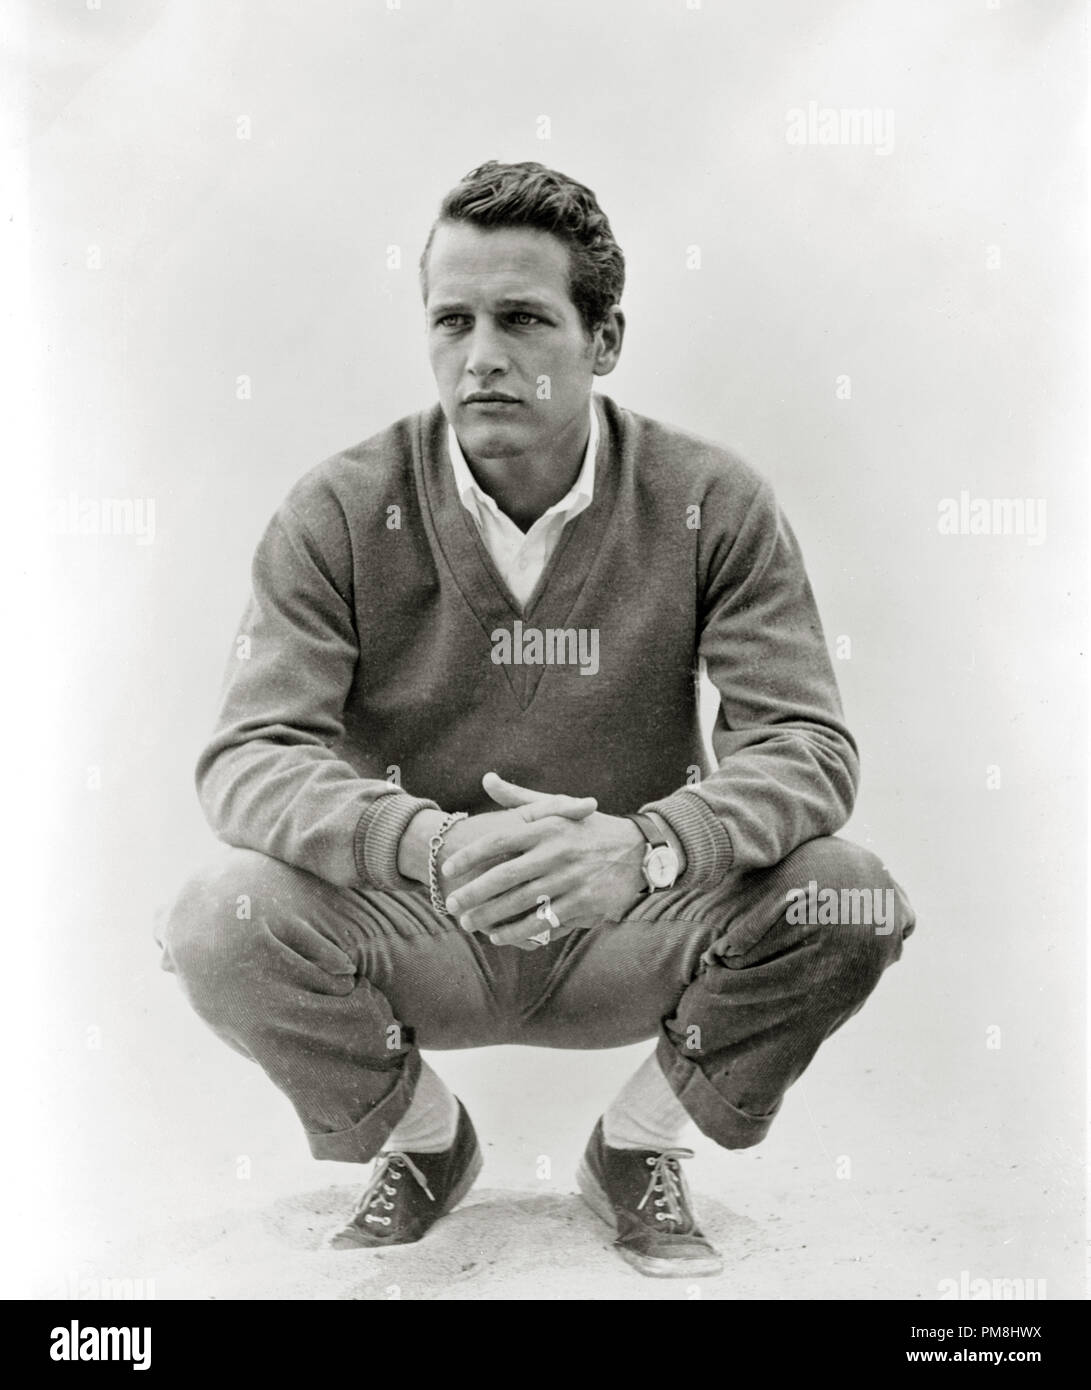 (Archivierung klassische Kino - Paul Newman Retrospektive) Paul Newman, circa 1958. Datei Referenz # 31510 028 THA Stockfoto